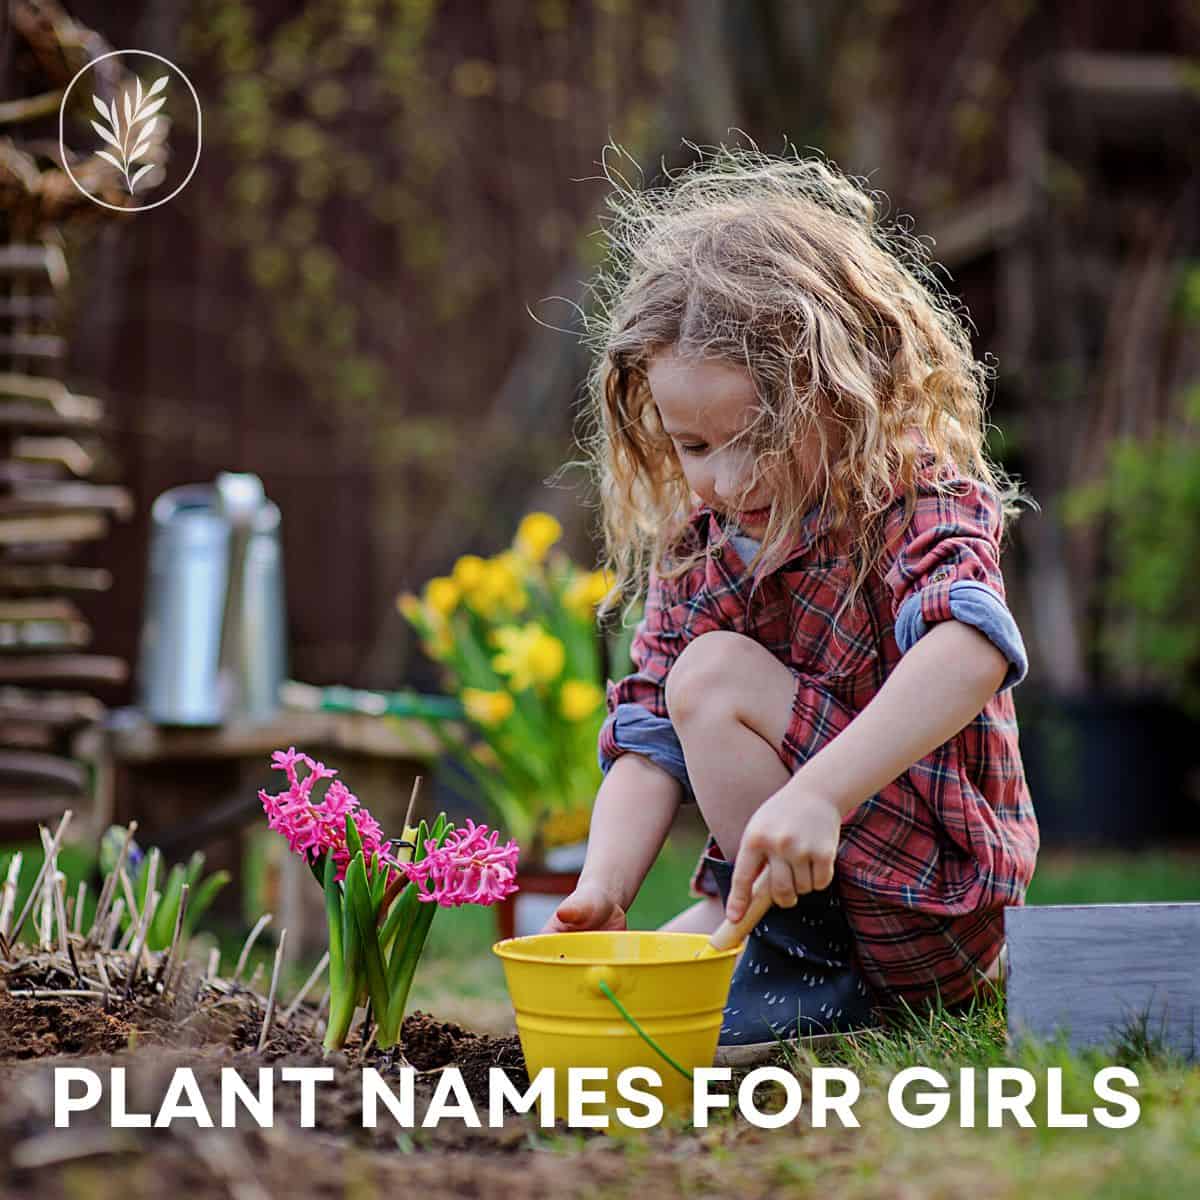 Plant names for girls via @home4theharvest